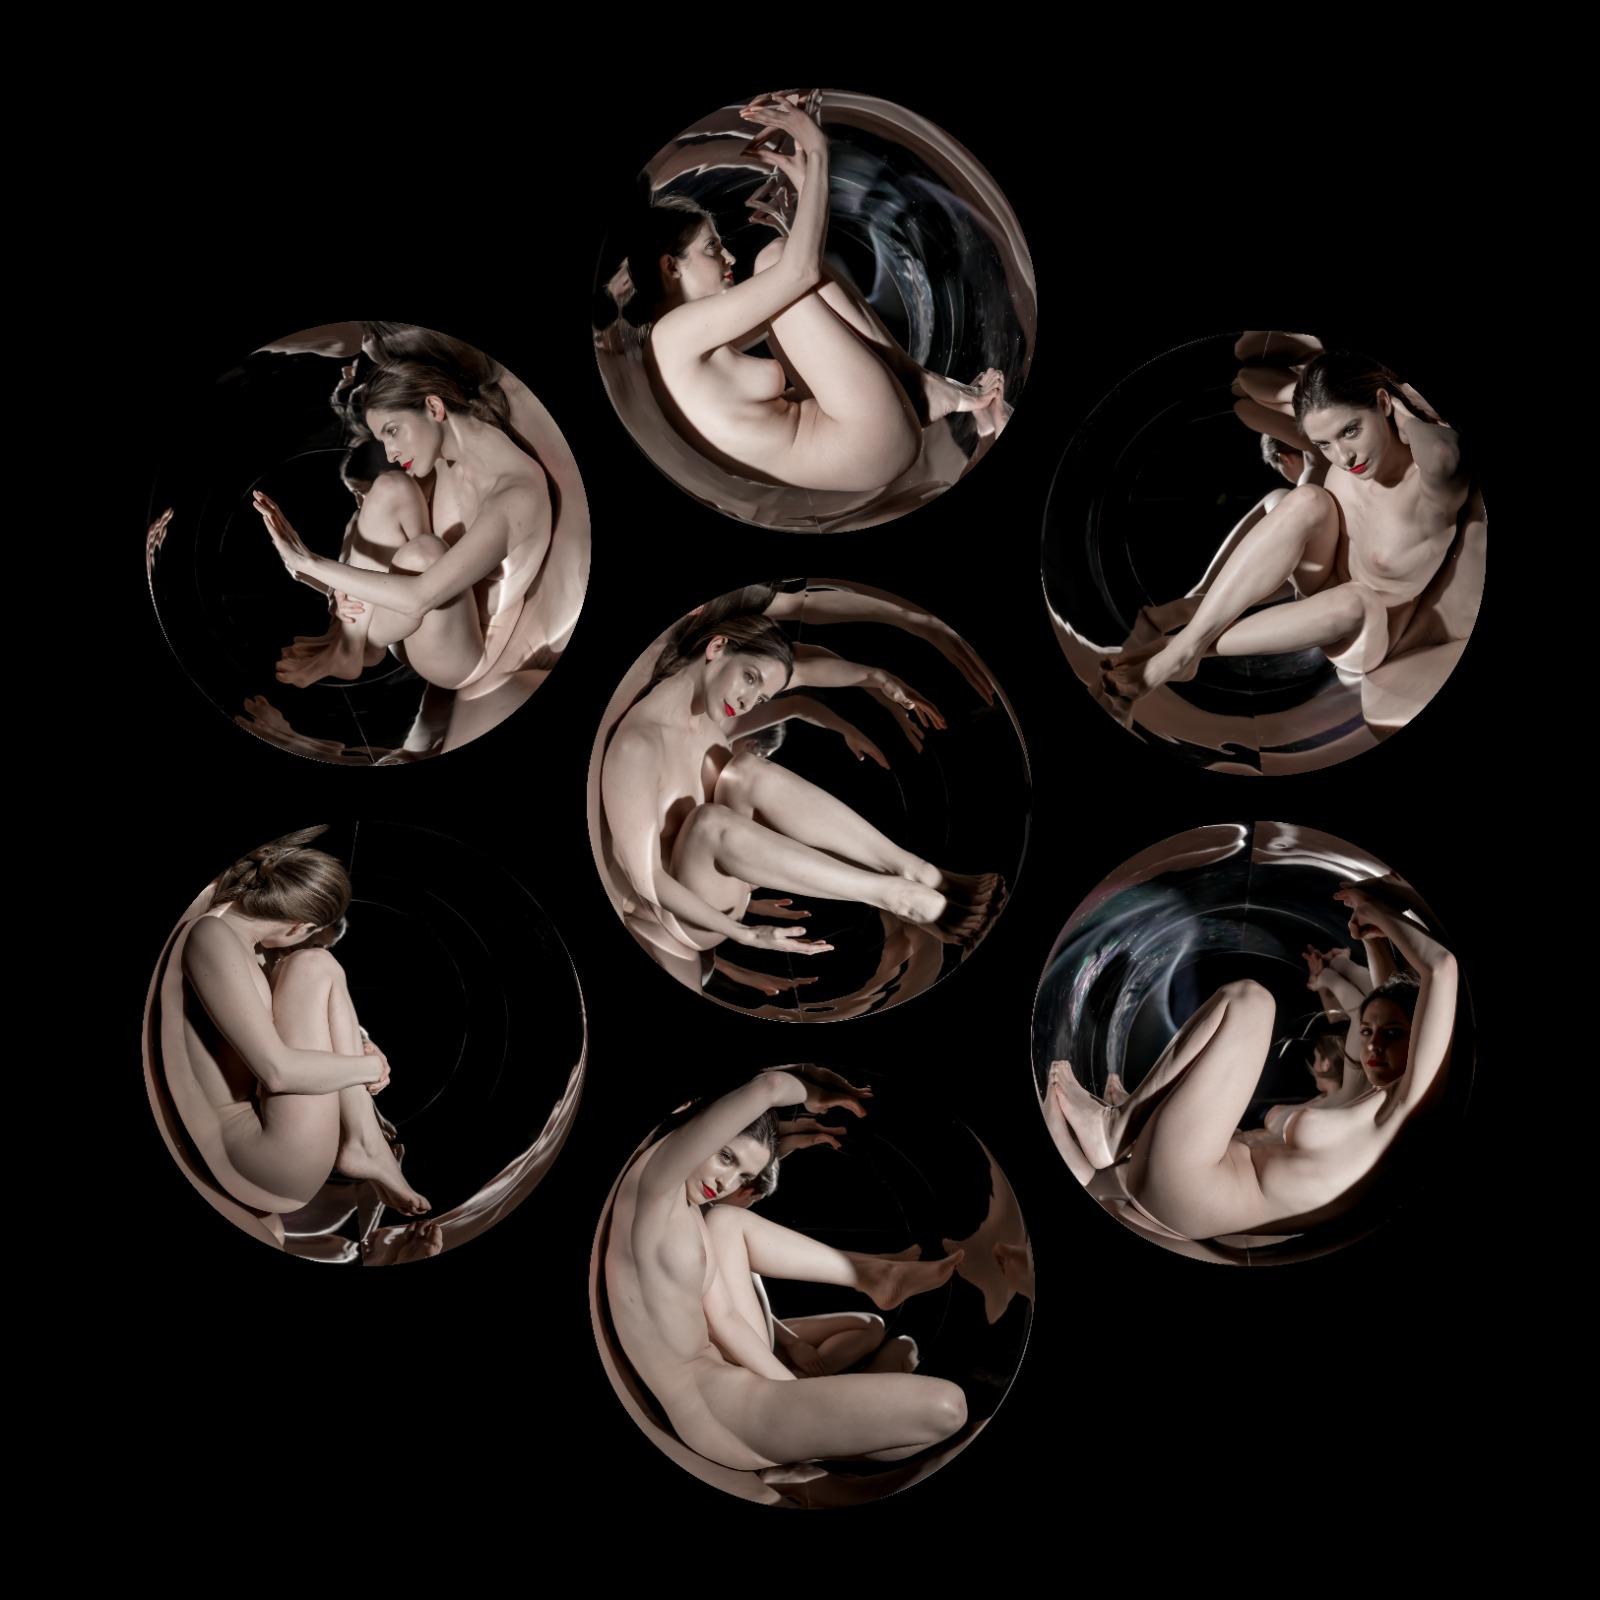 "Cir1" 3-D Lenticular Schwarz-Weiß figuratives Aktfoto gerahmt, Contemporary